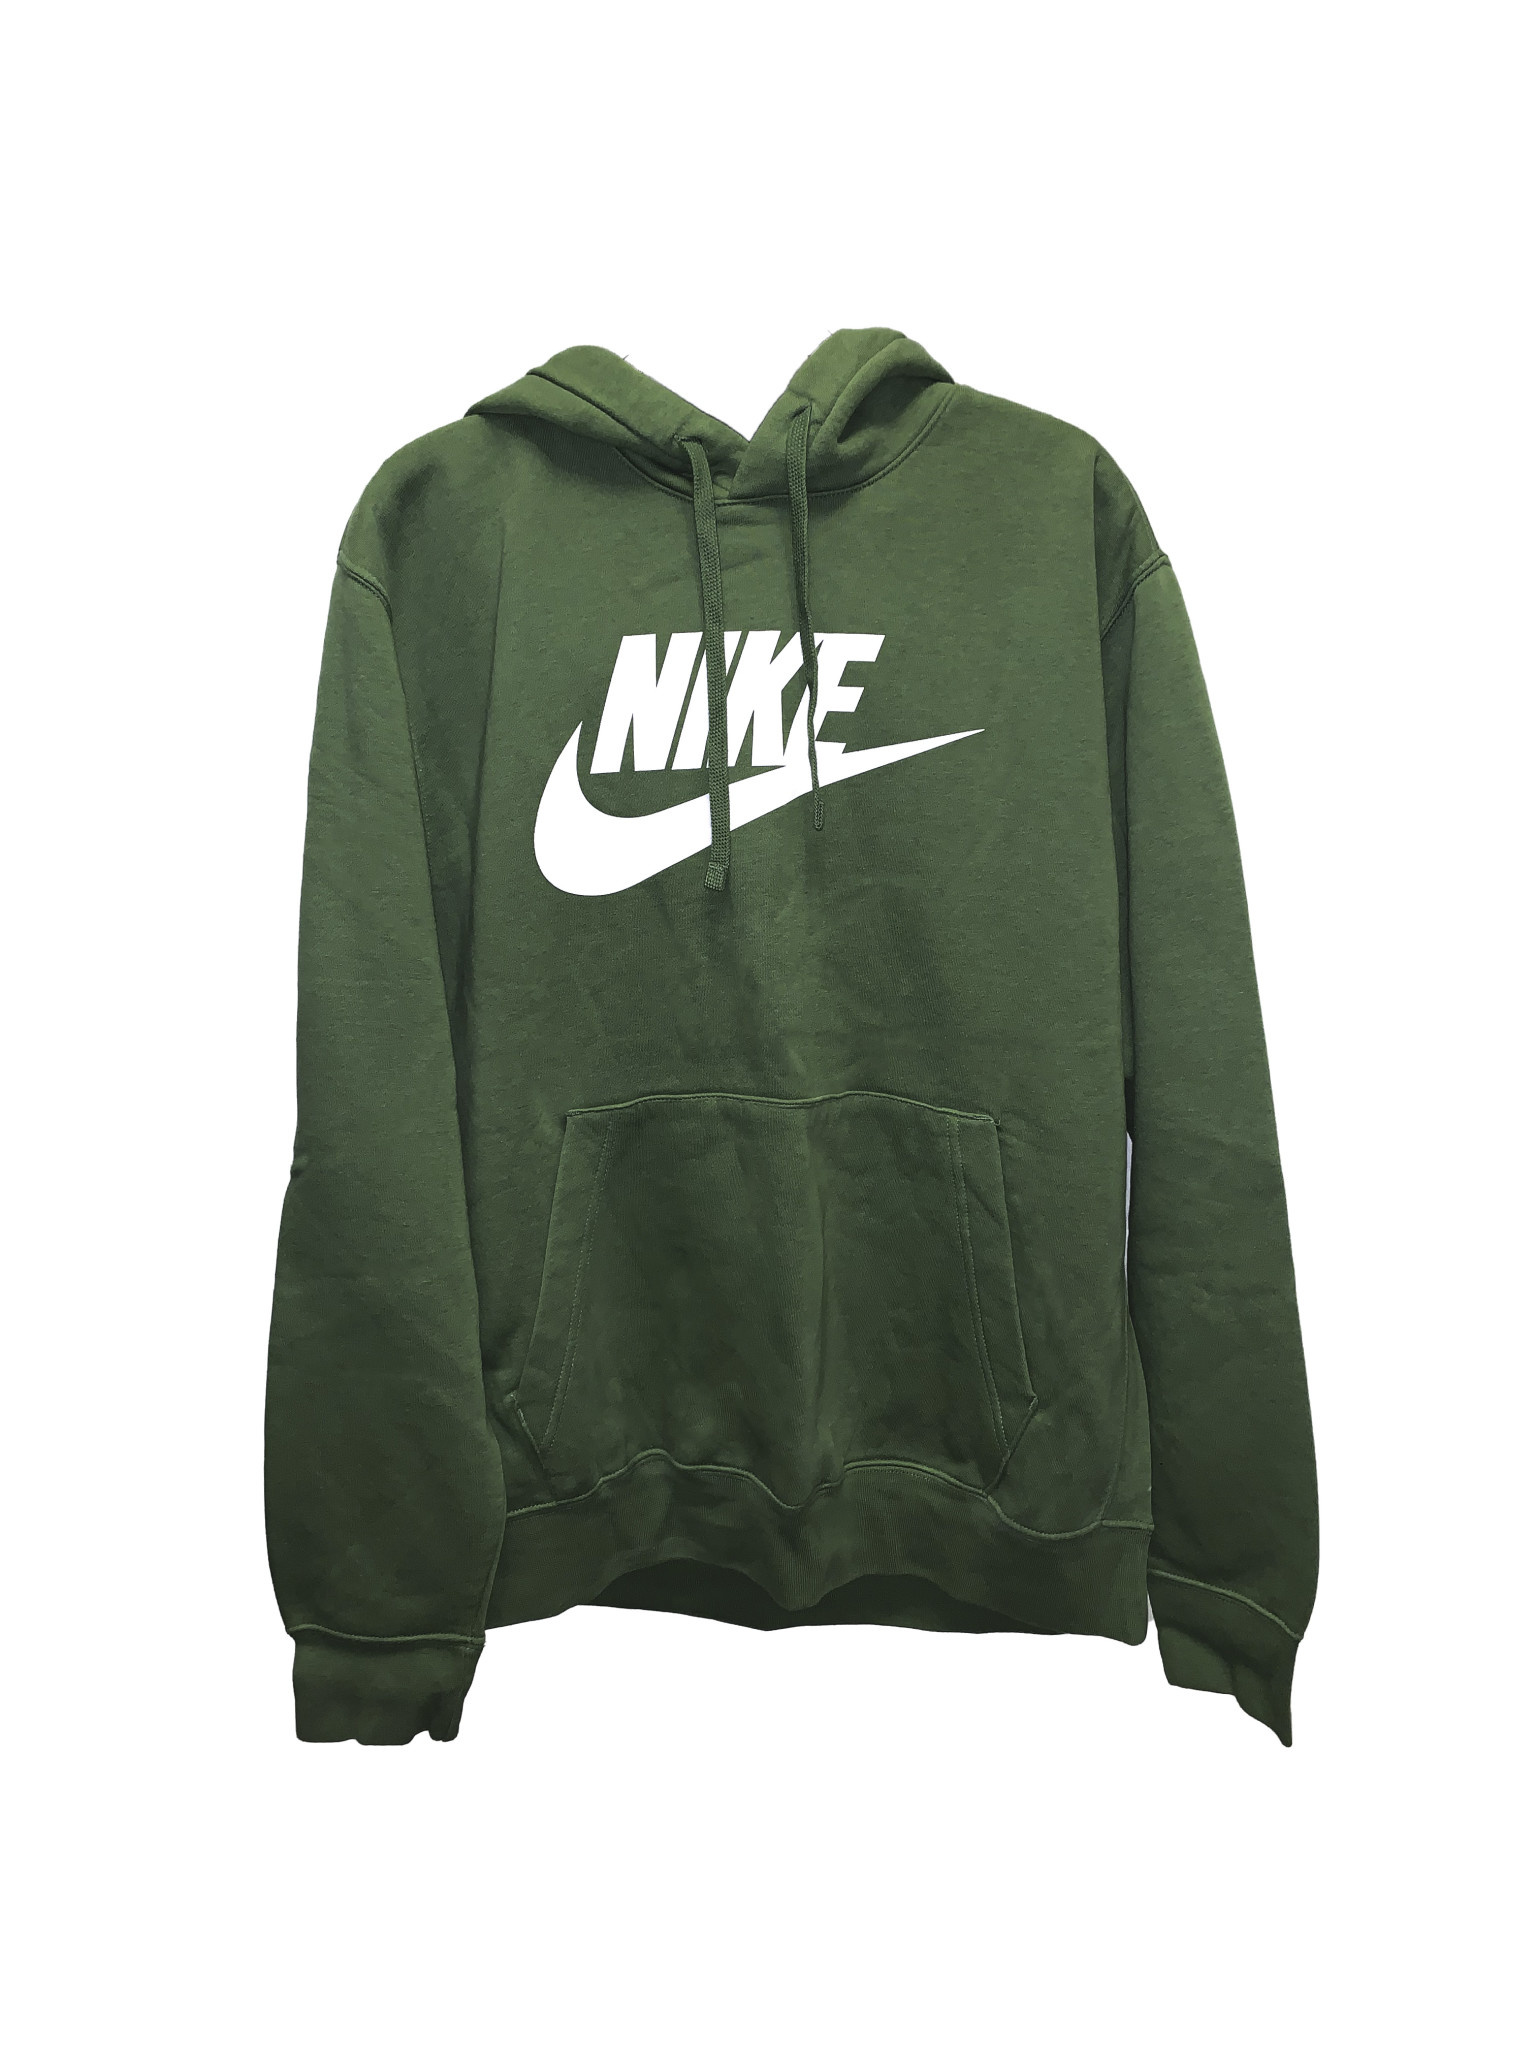 Green Drawstring Hoodie by Nike on Sale